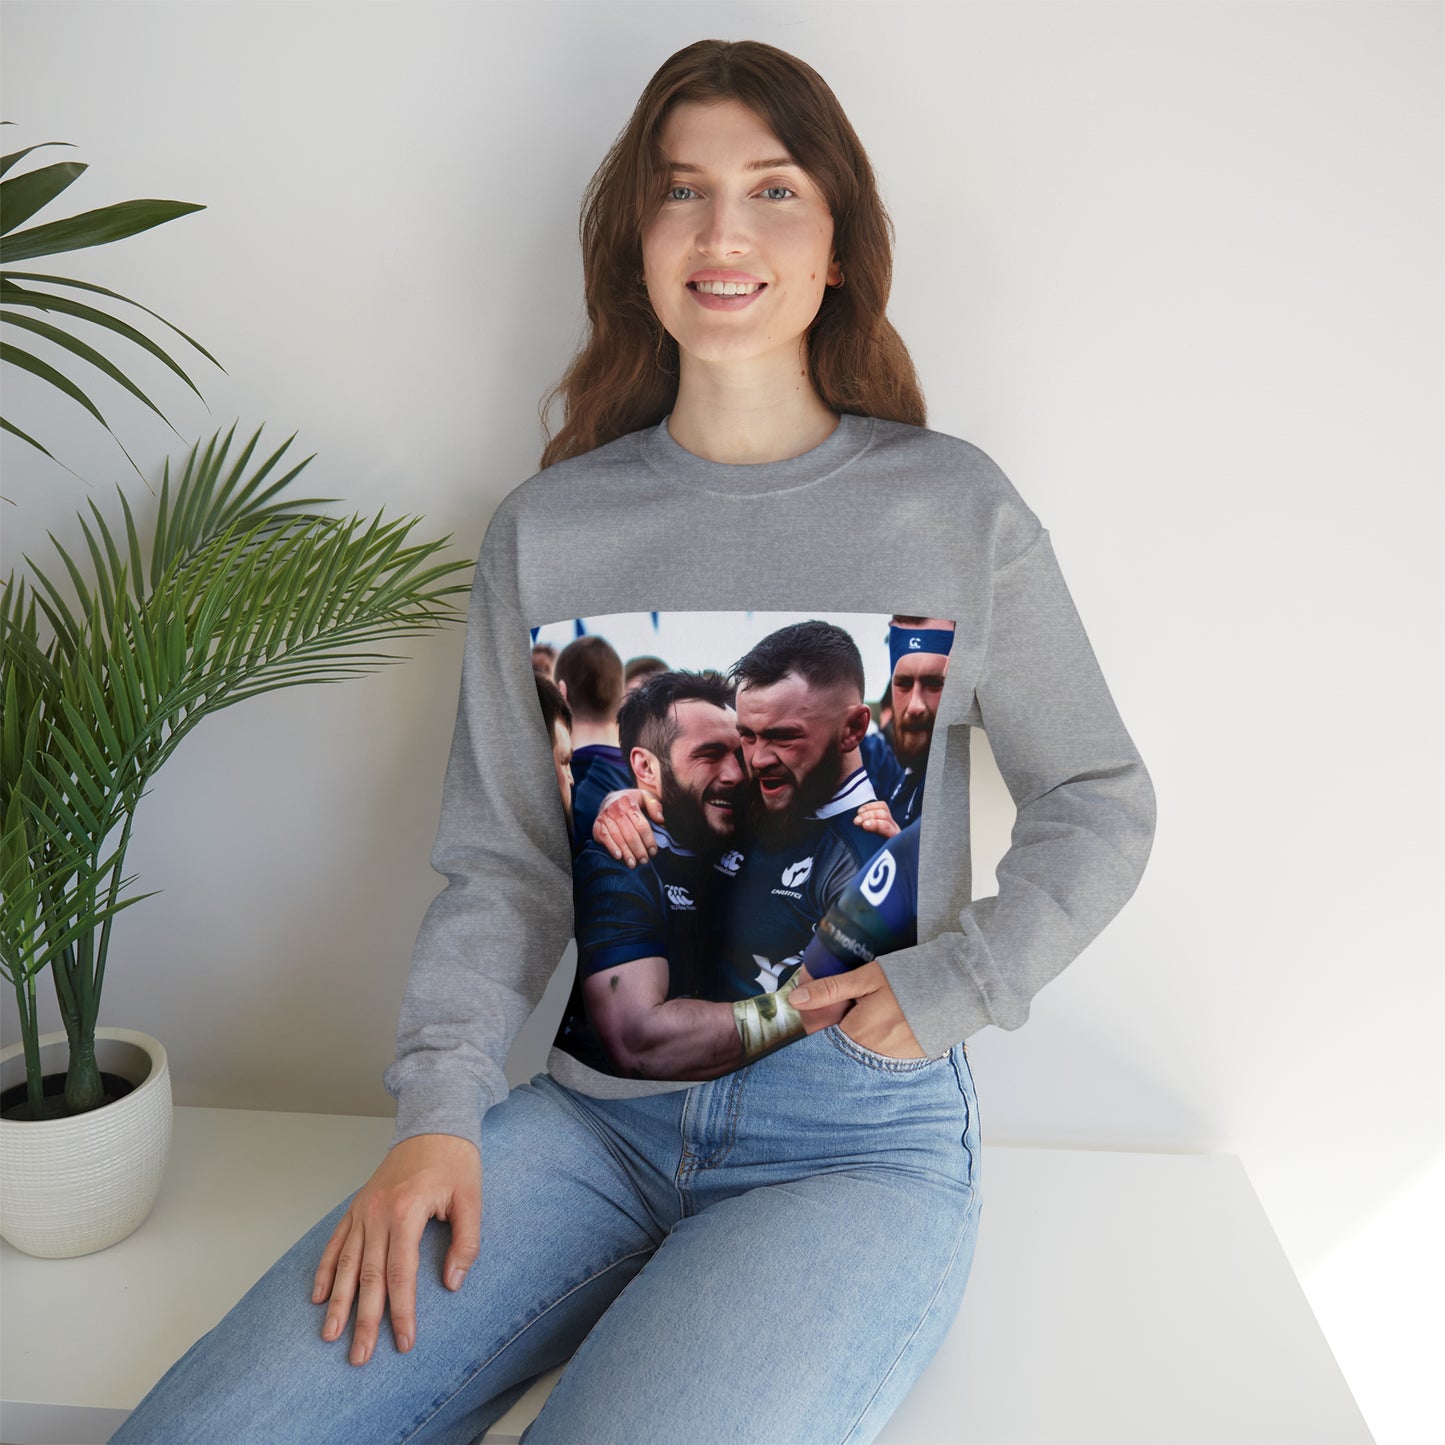 Post Match Scotland - light sweatshirts